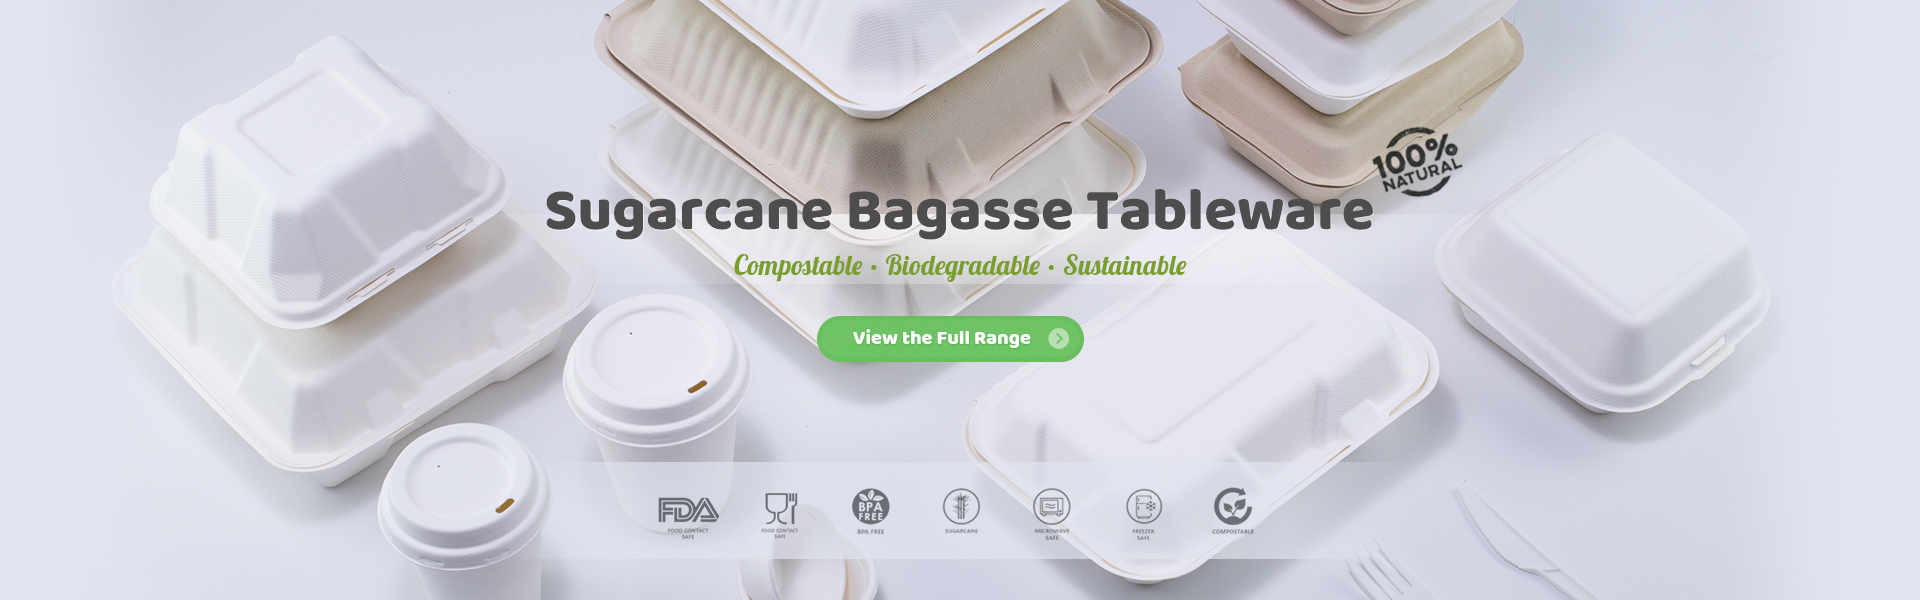 100% Compostable & Biodegradable Sugarcane Bagasse Tableware 